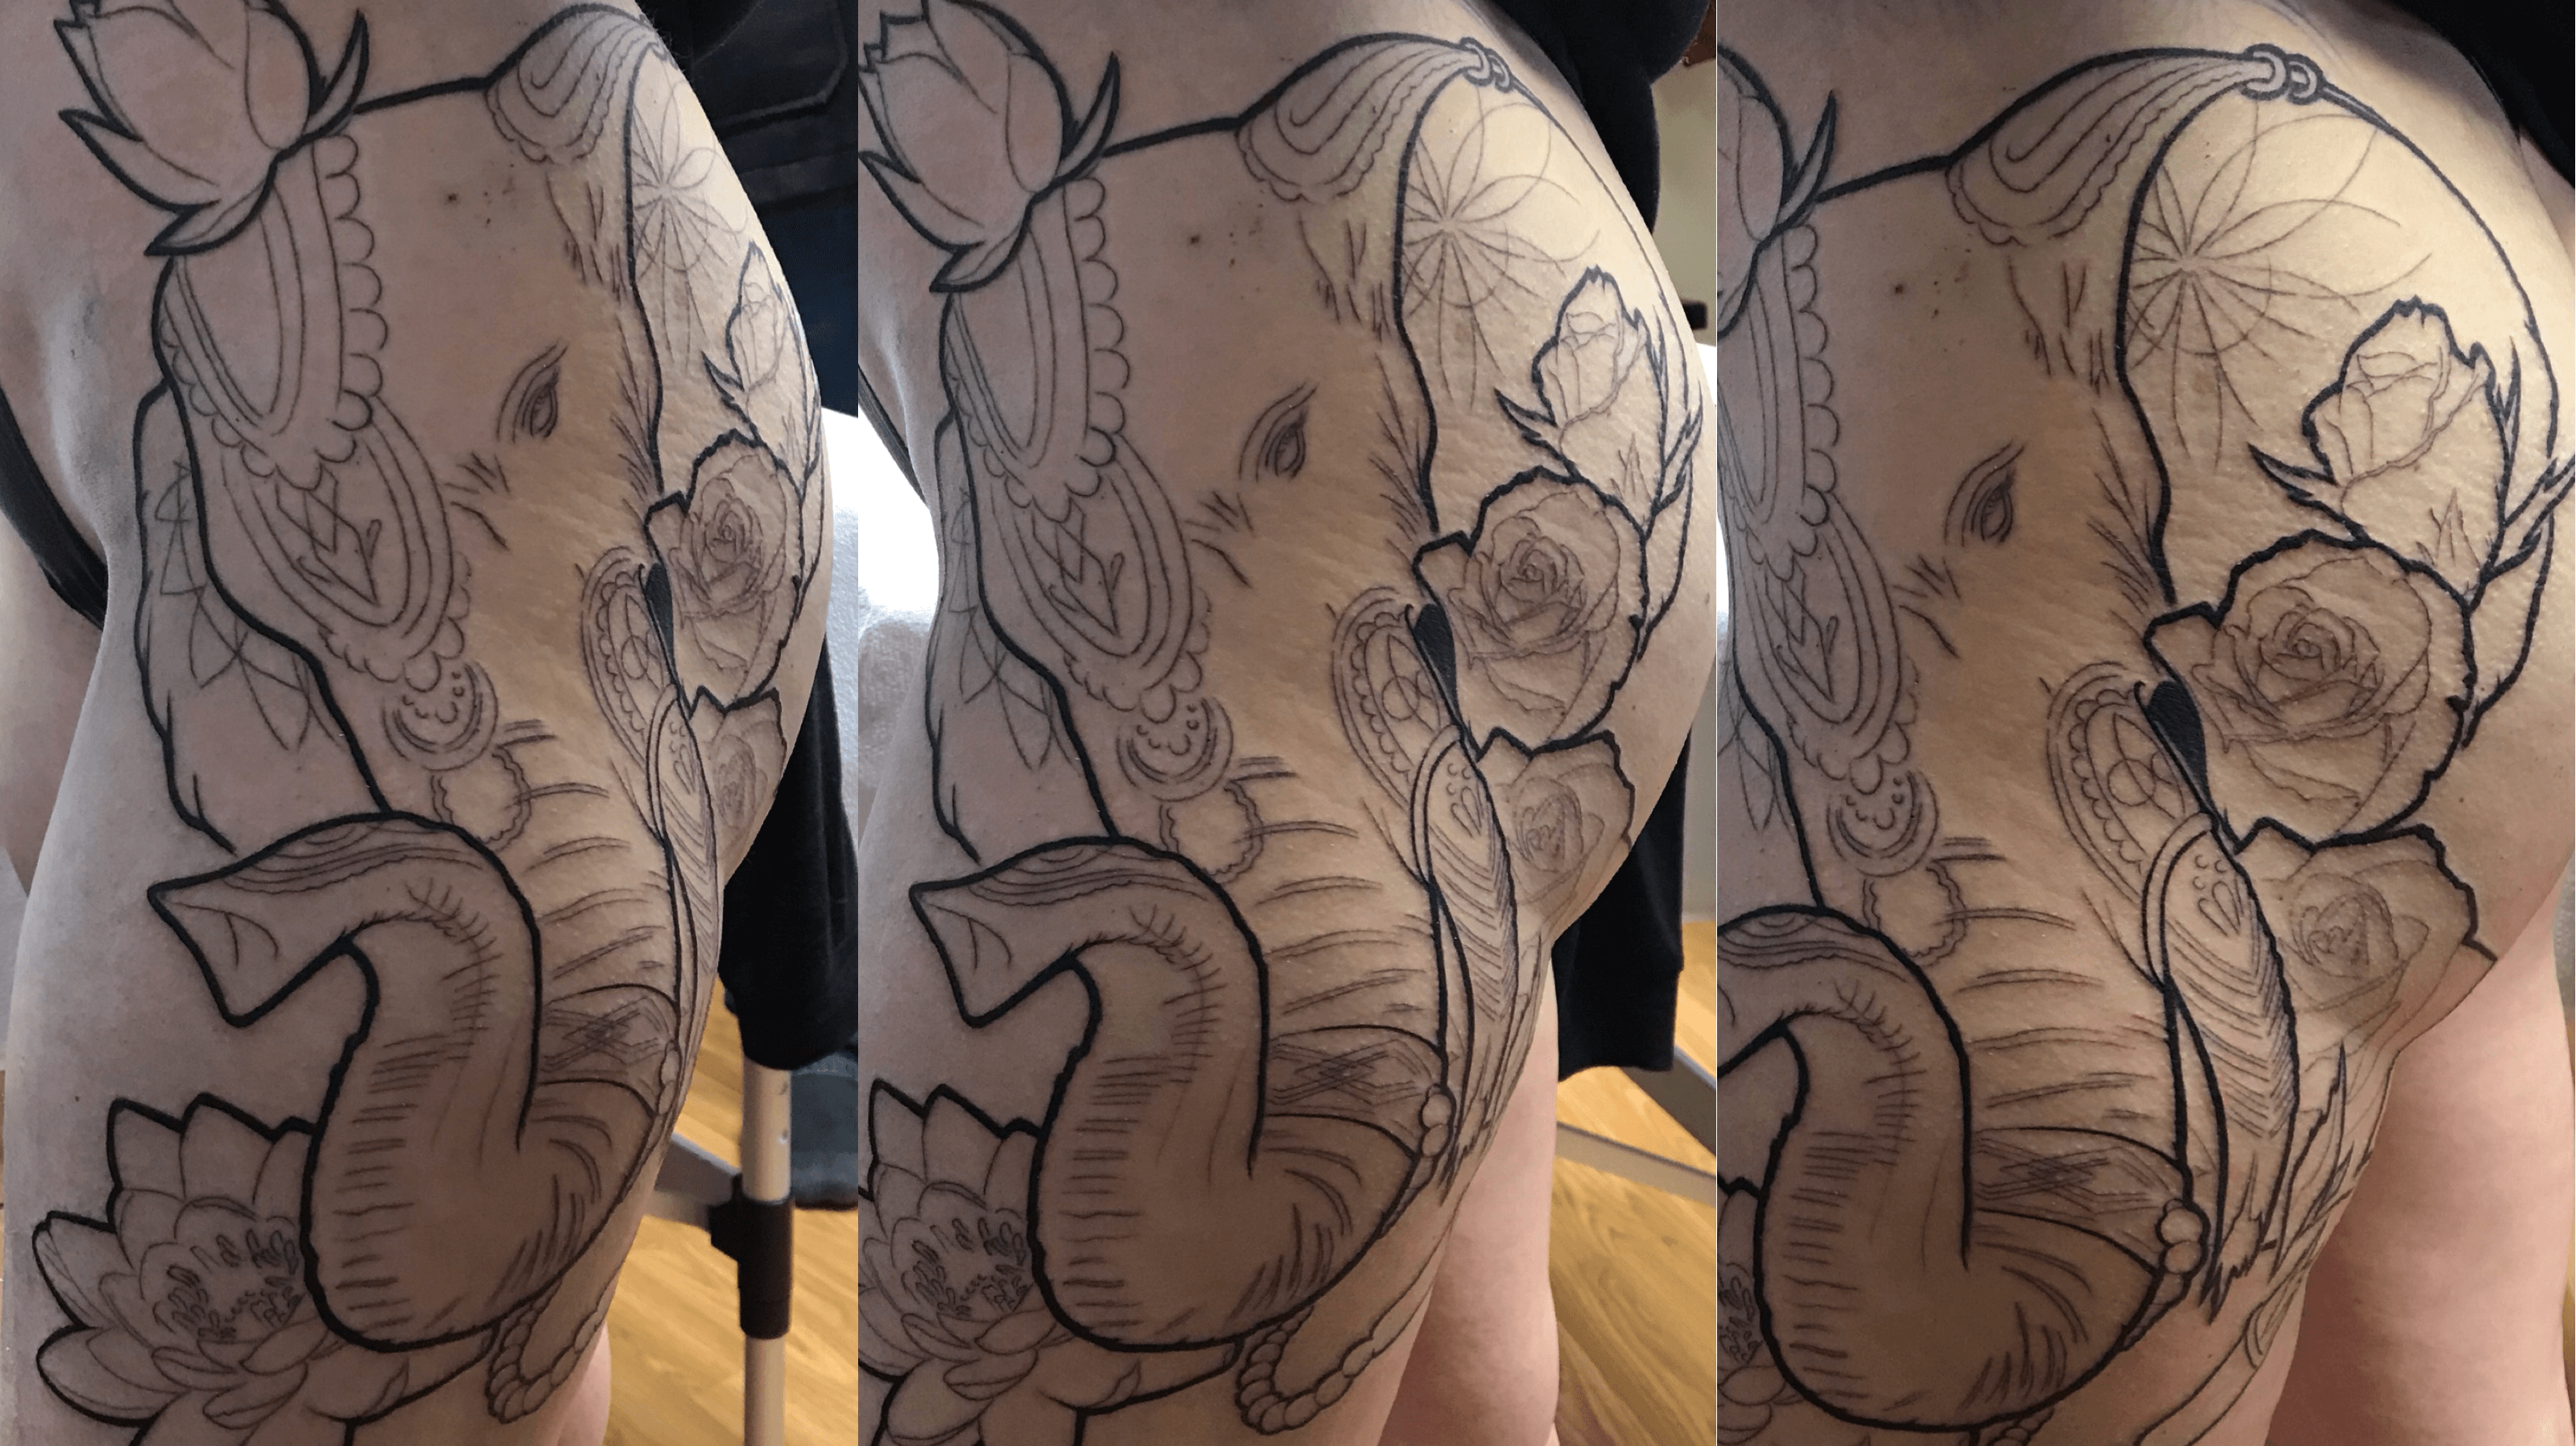 ICONYX tattoo on Twitter Elephant and flowers thigh design tattooed  yesterday  elephant elephanttattoo flowers flowertattoo pink  purple jewels gems jeweltattoo thightattoo thightattoosforwomen  girlswithtattoos tattoosformen 